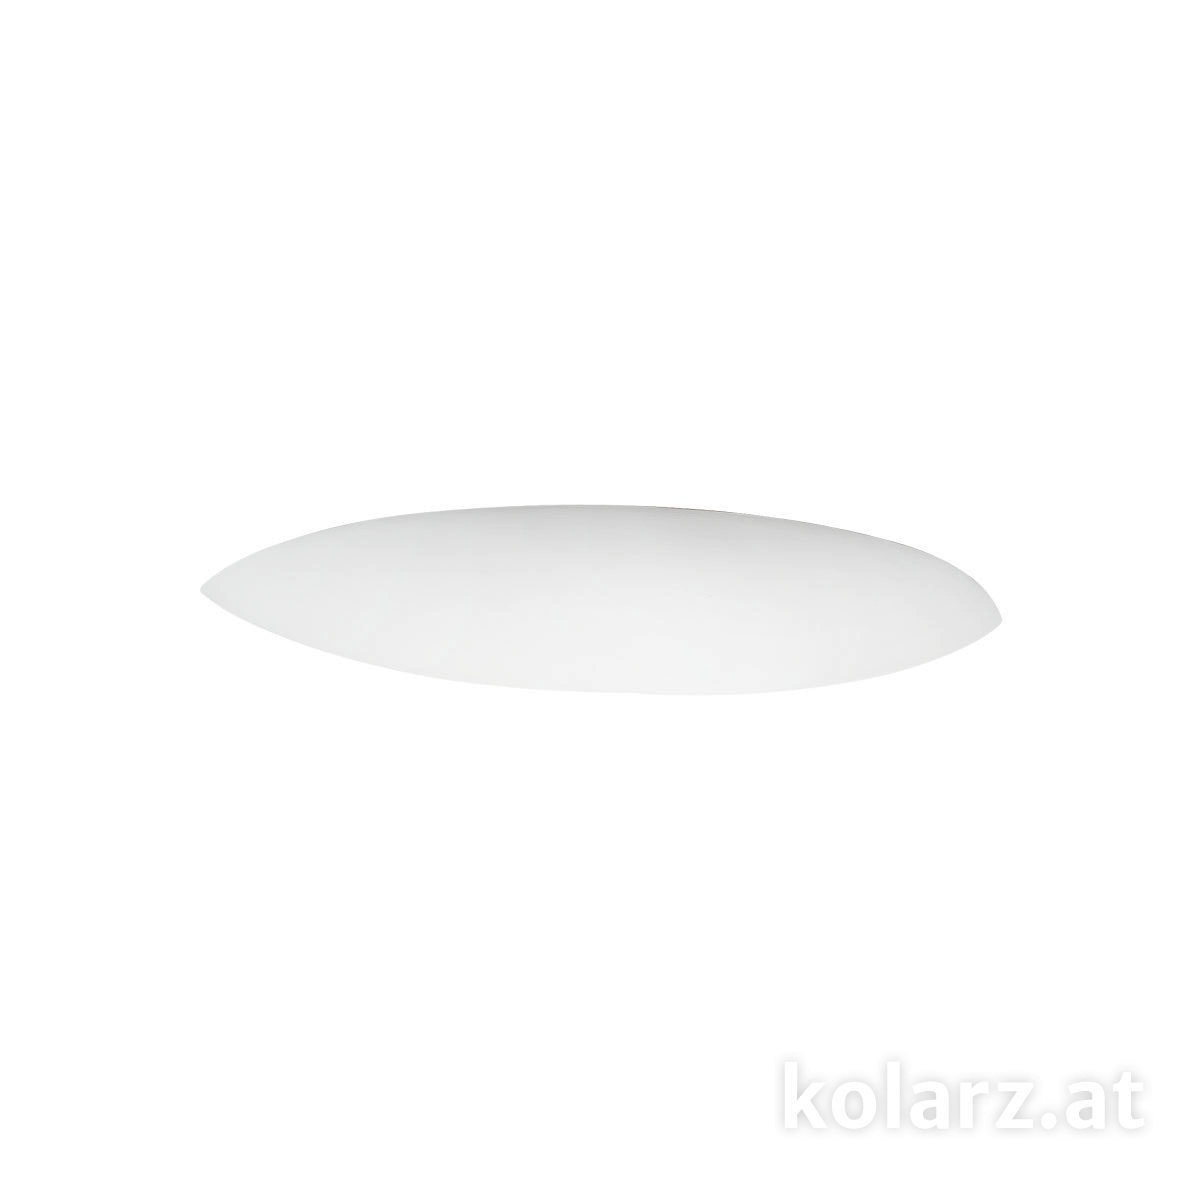 KOLARZ Leuchten - 219.60.1 - Elegance Wandleuchte